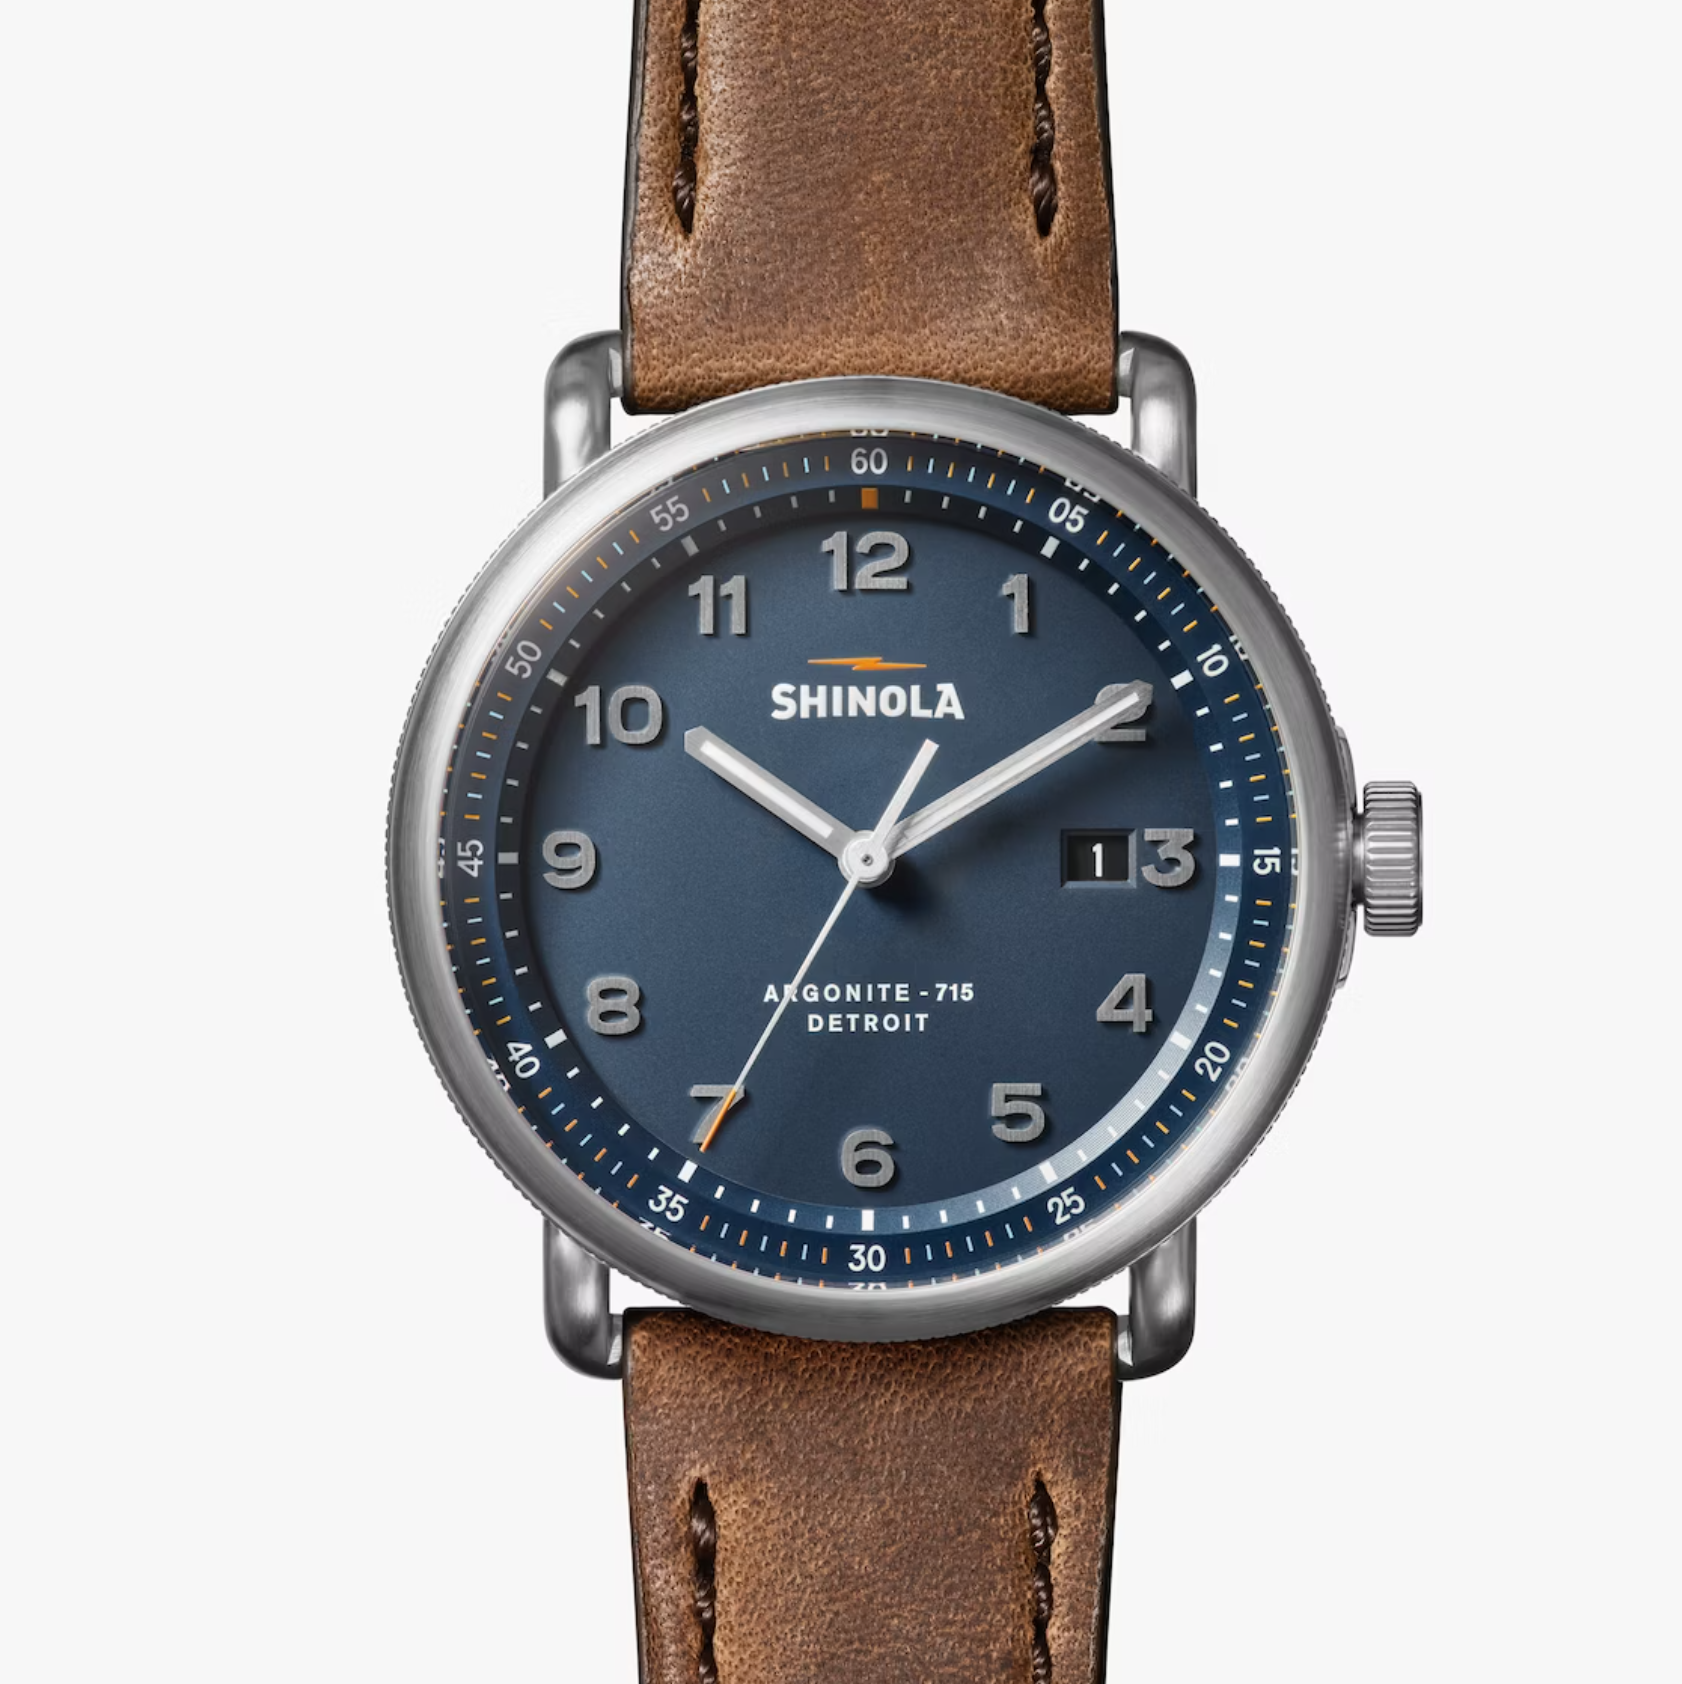 Shinola - Canfield Model C' 56 3hd 43mm Watch - British Tan Leather Strap